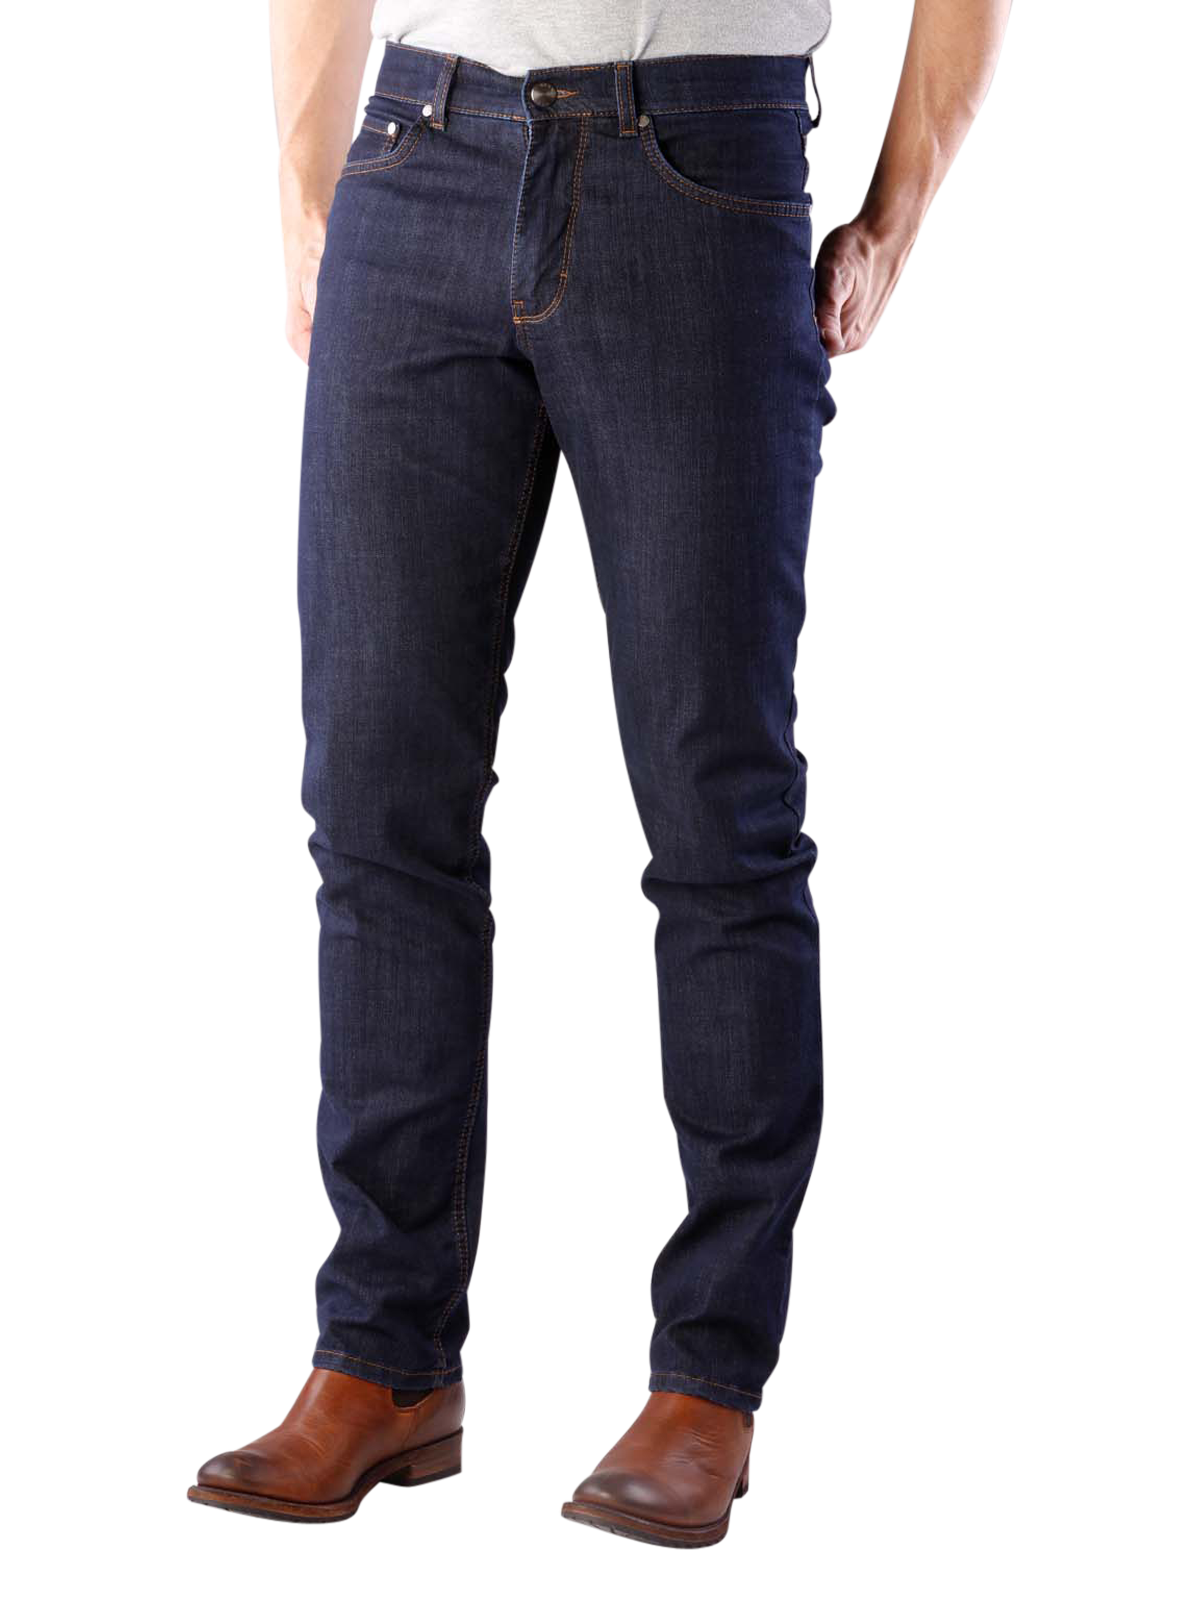 Icon 2 - Brax Cooper Denim Jeans blue black